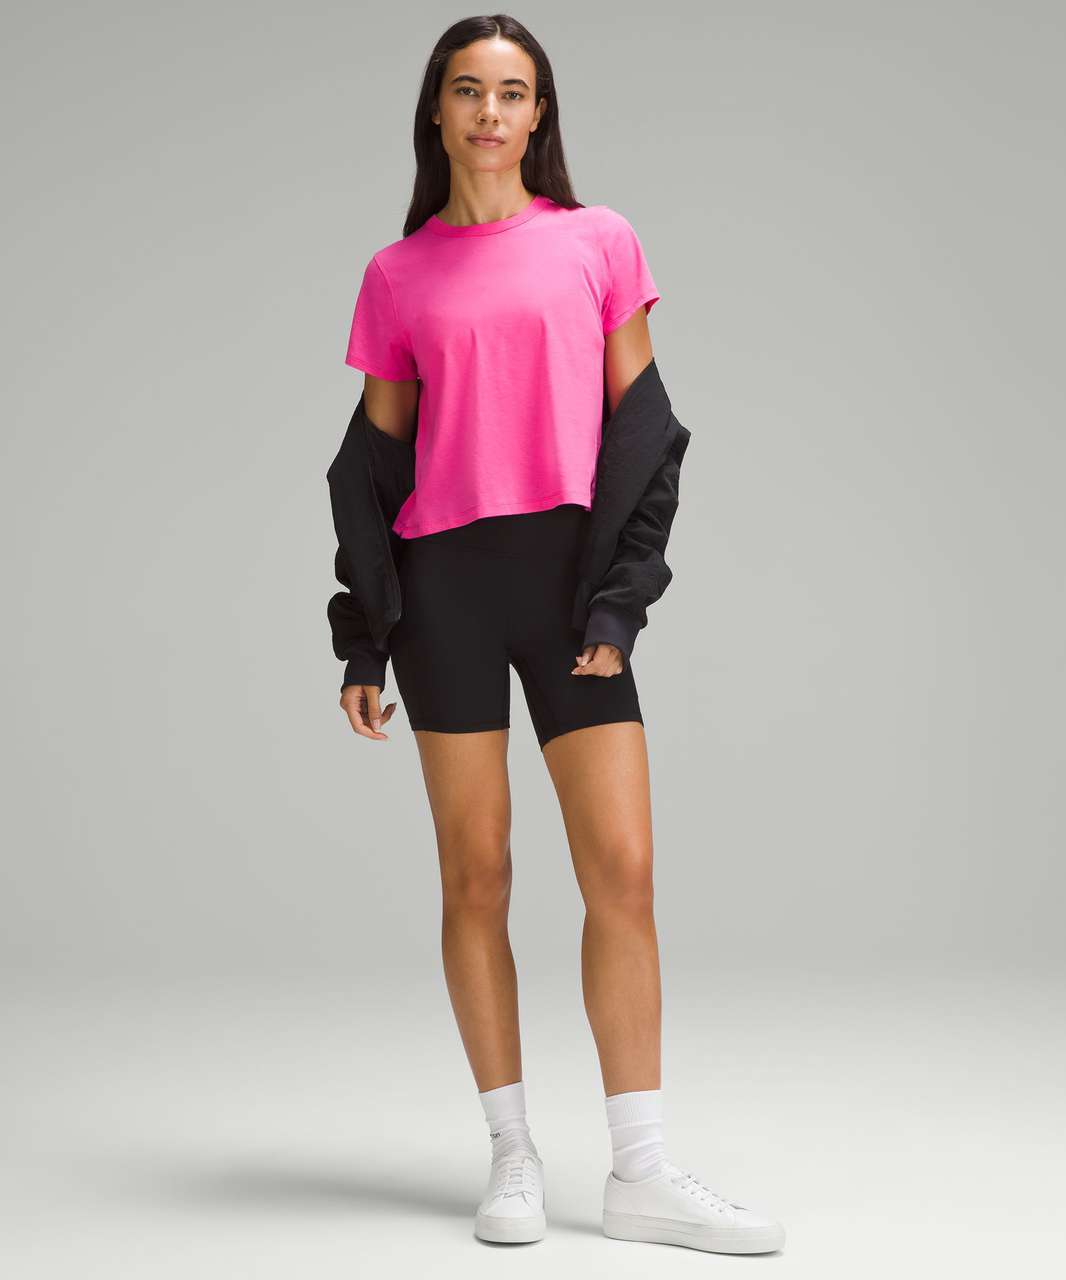 Lululemon Classic-Fit Cotton-Blend T-Shirt - Sonic Pink